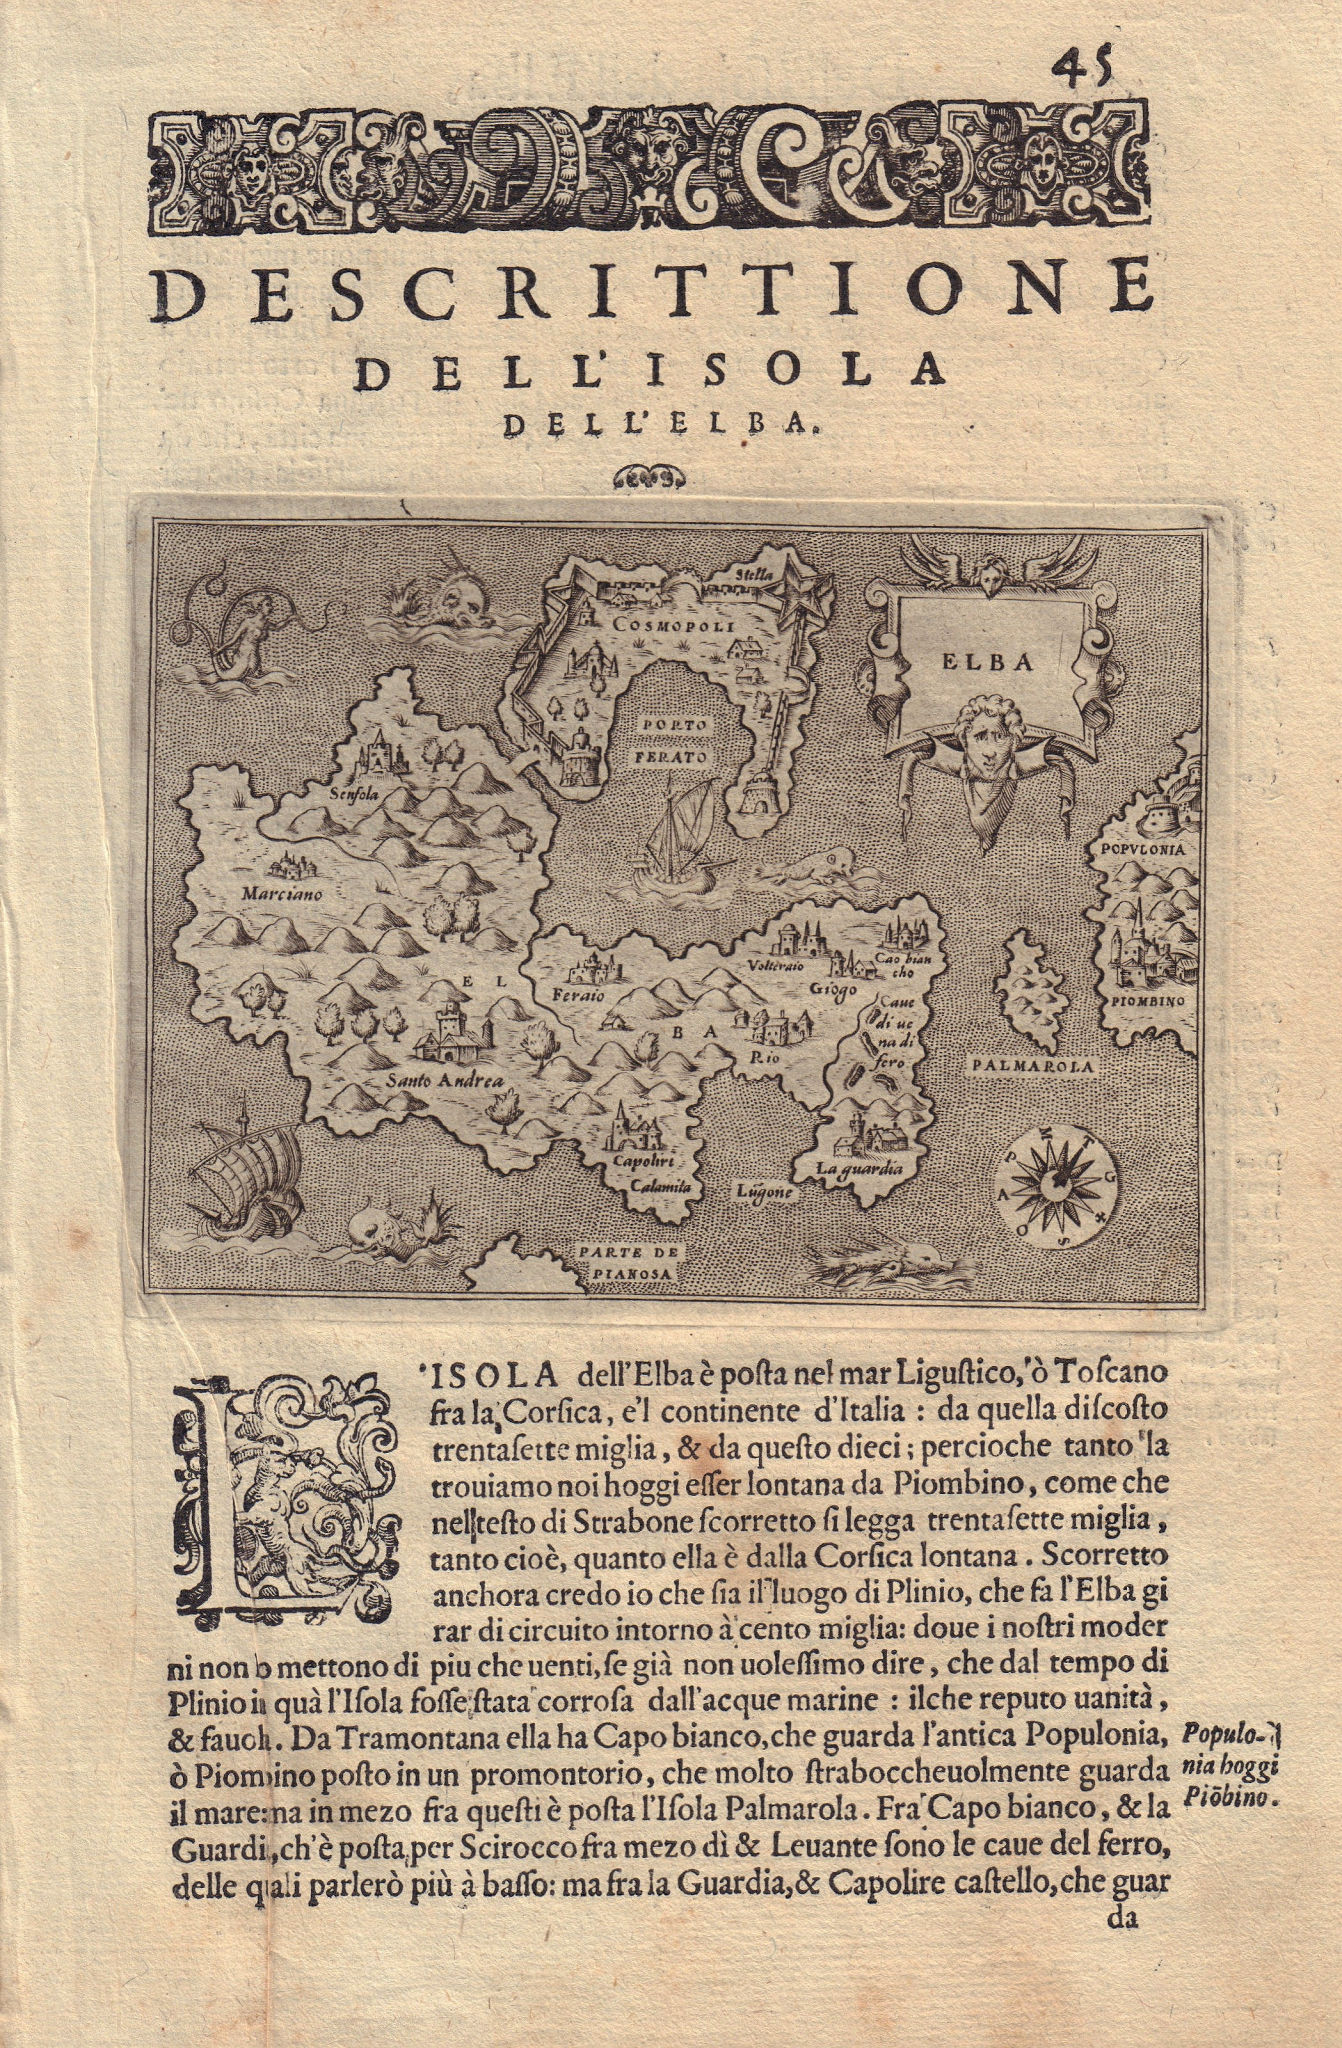 Associate Product Descrittione dell' Isola dell' Elba. PORCACCHI. Italy 1590 old antique map